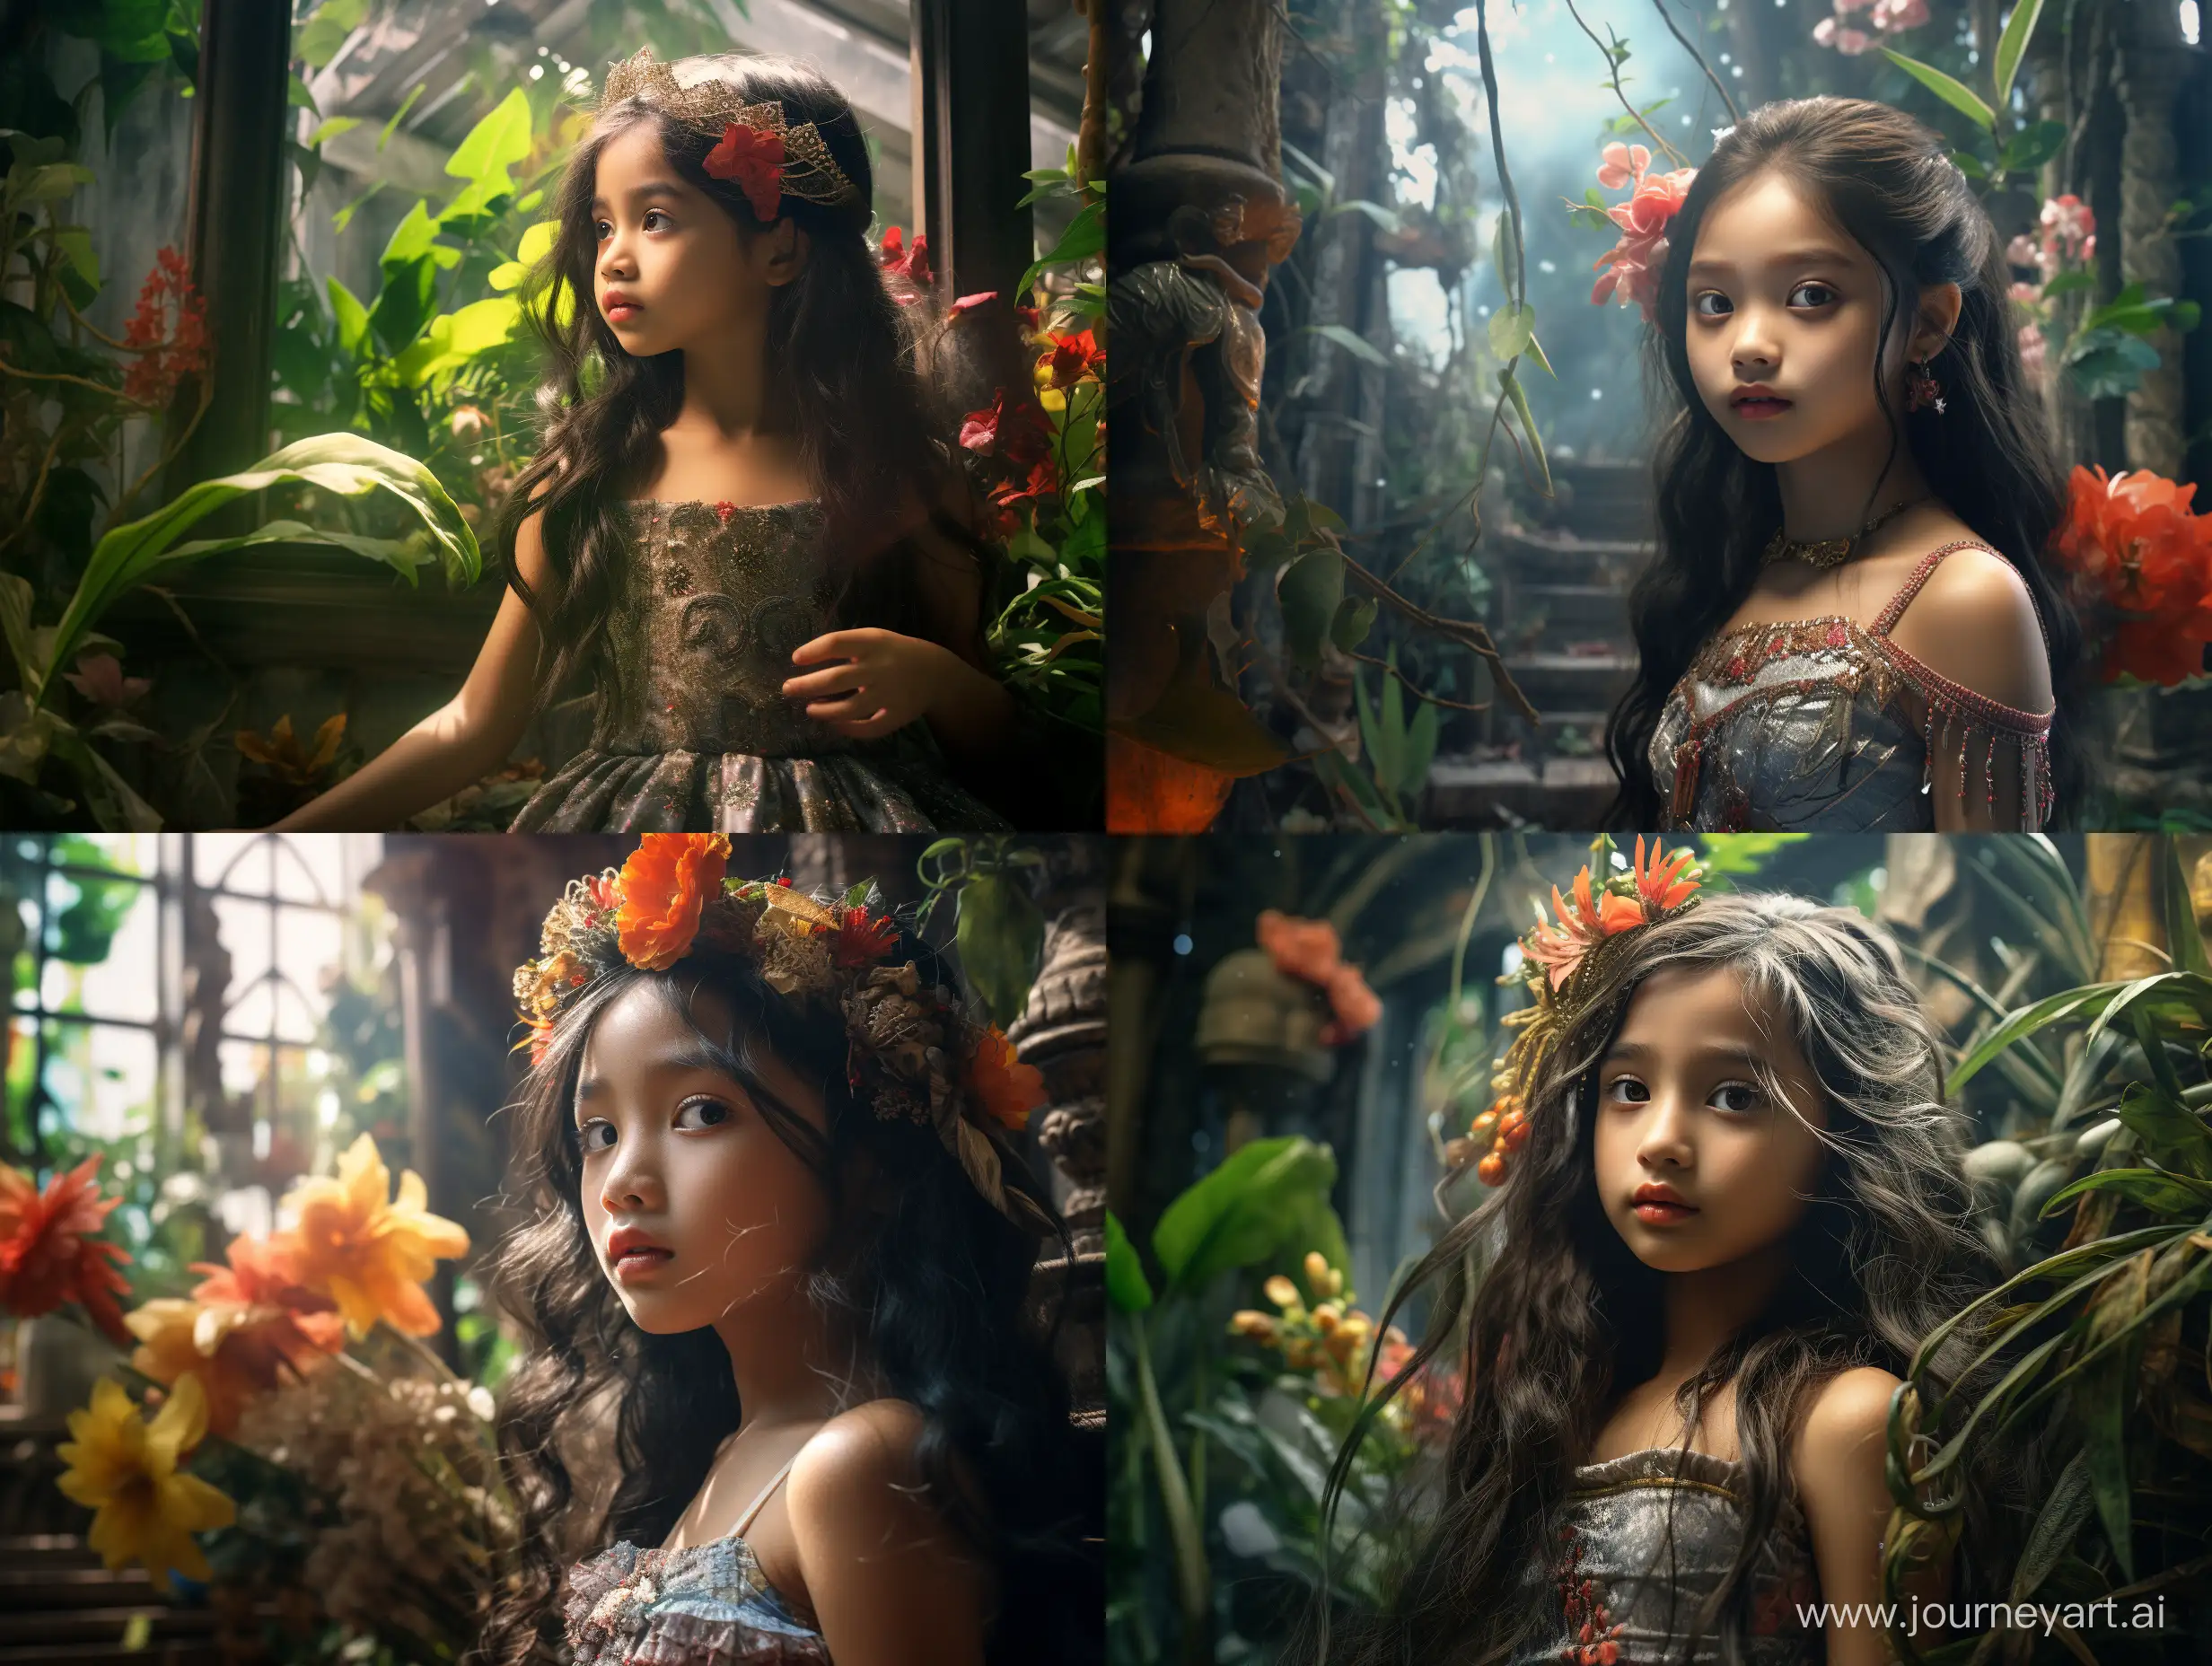 Enchanting-Princess-Seeks-Love-in-a-Lush-Garden-3D-Photorealistic-8K-Image